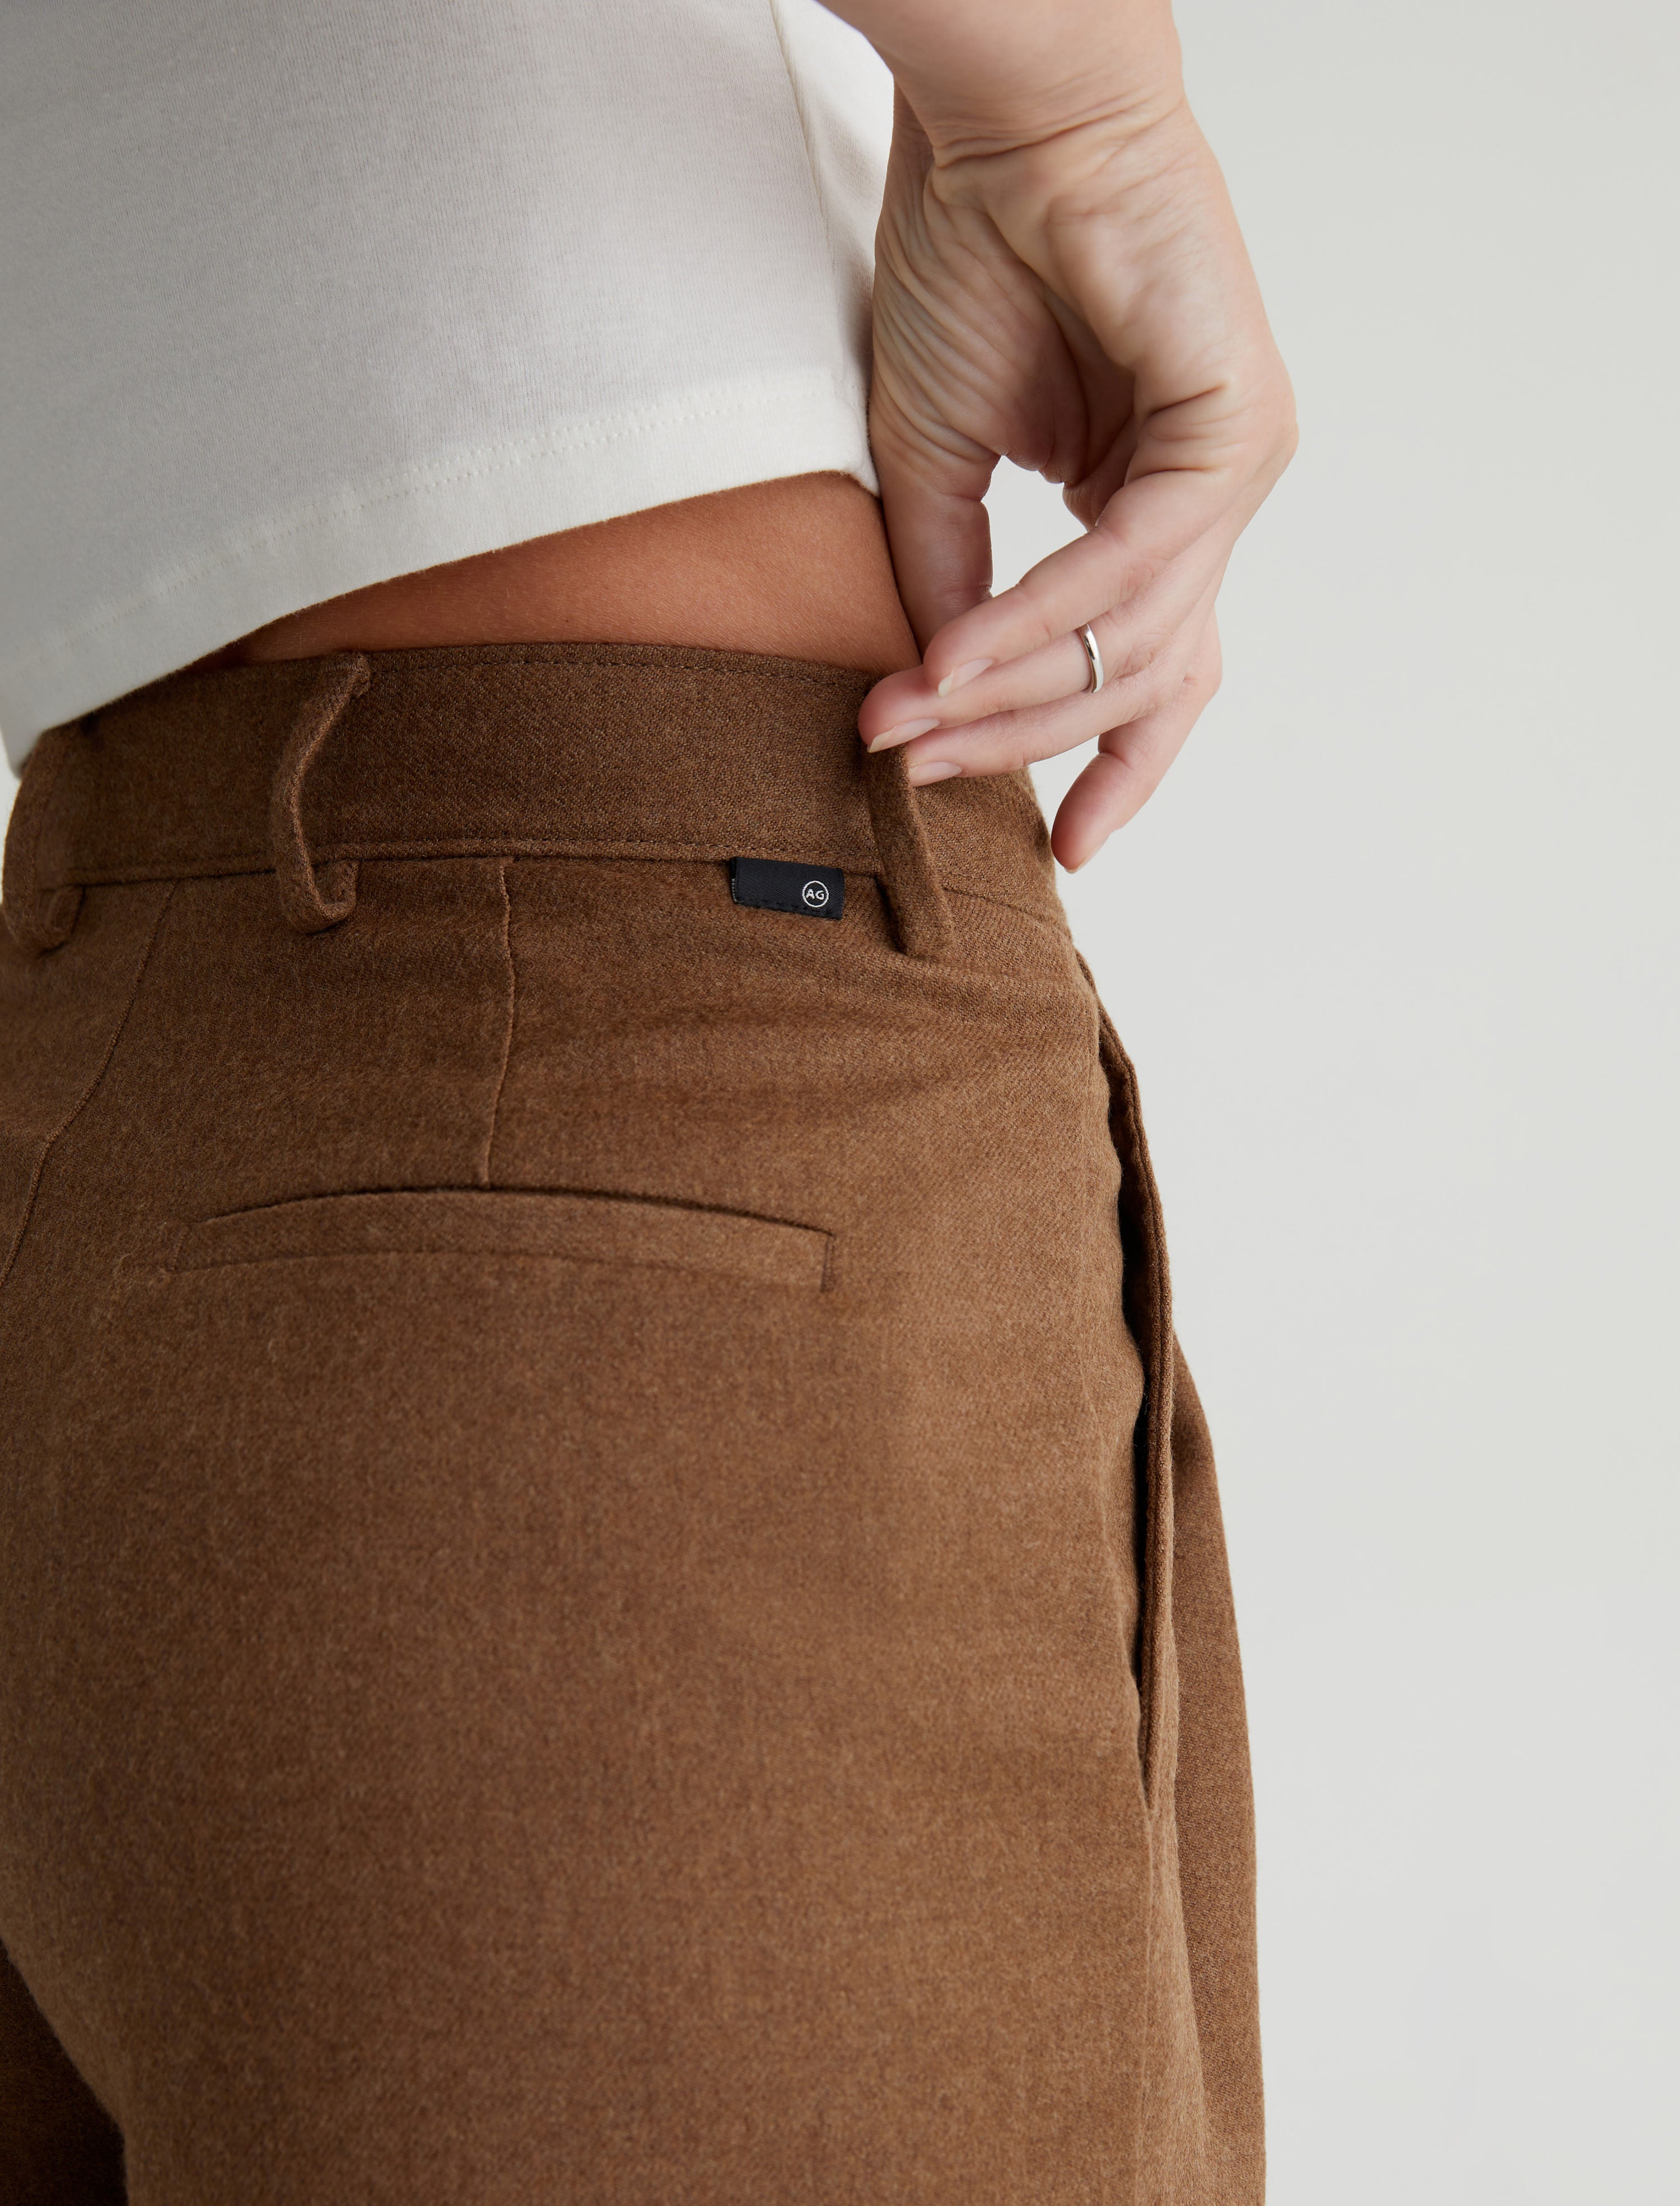 KAPITAL Denim pants bottom Size 30 Indigo Waist width 35 cm Rise 29 cm Men  USED | eBay